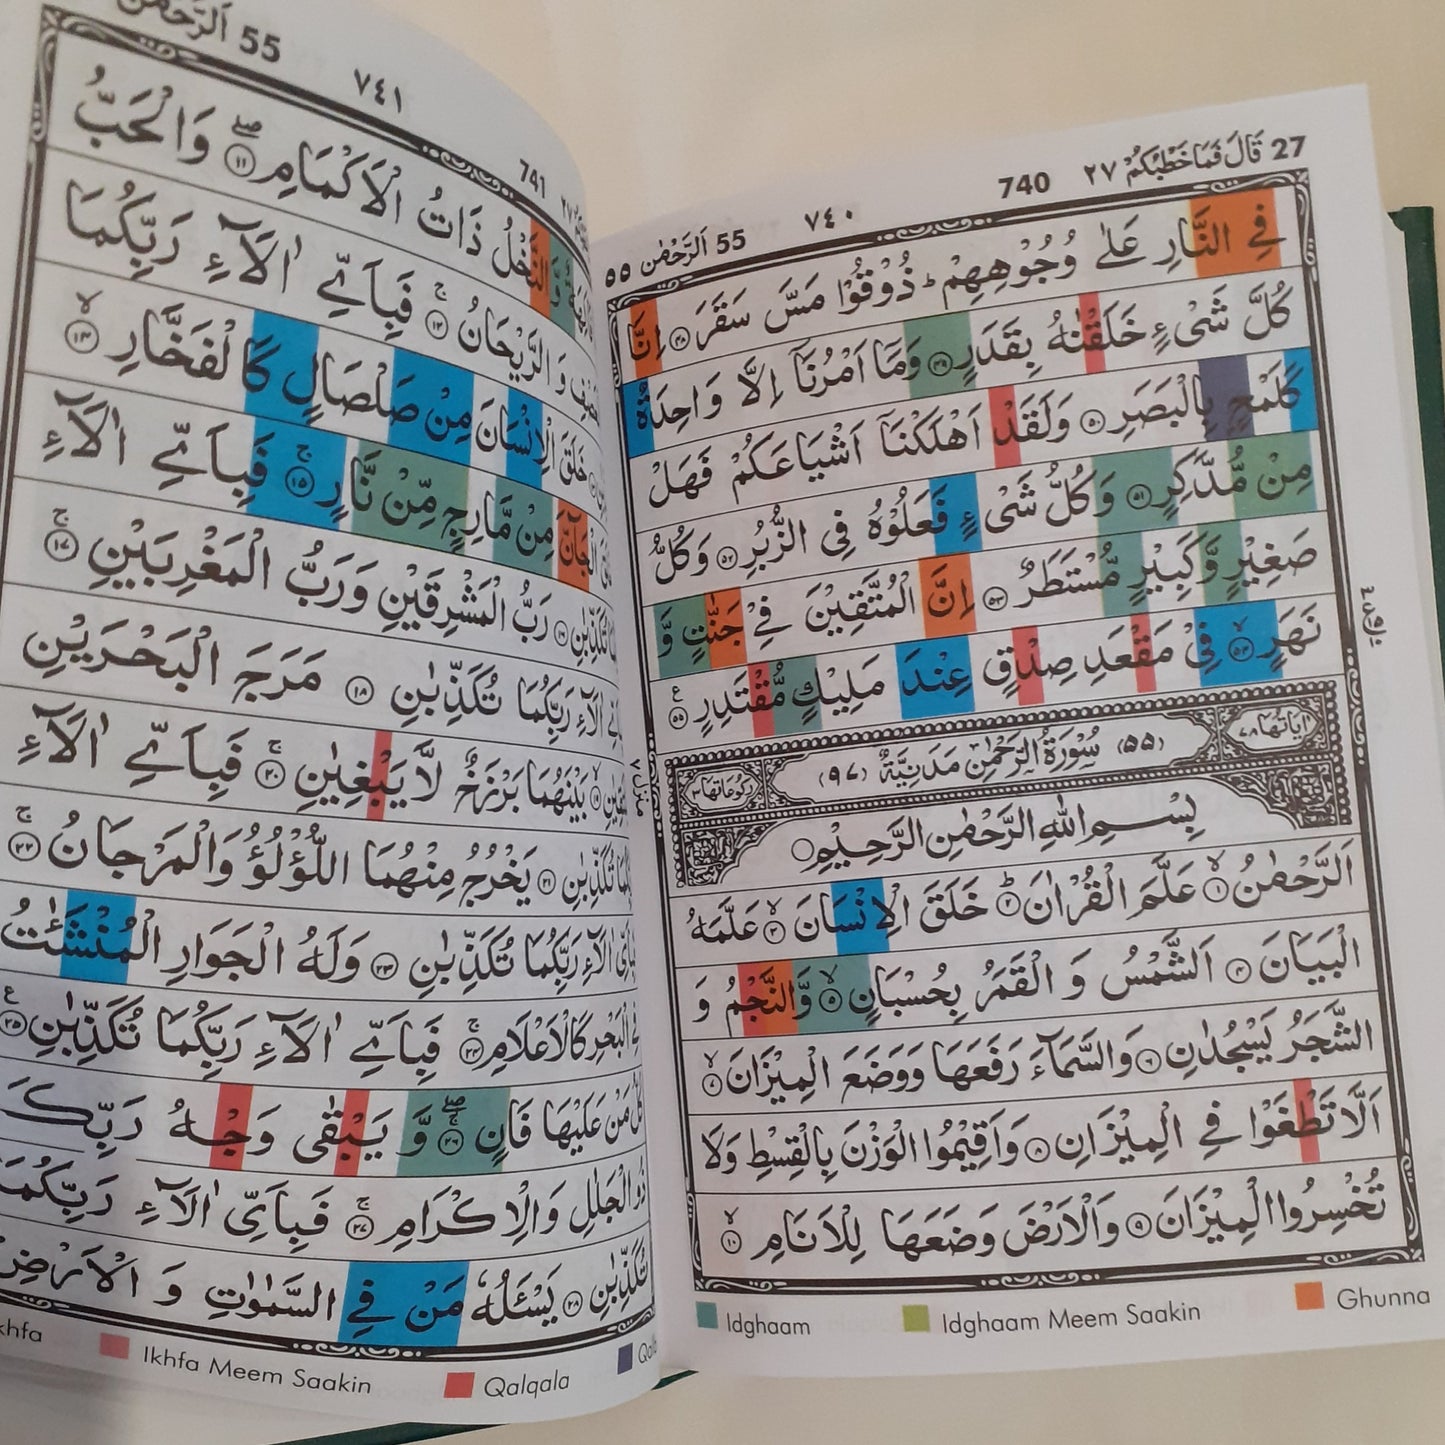 Colour-Coded Quran with Tajwid Rules (Arabic)